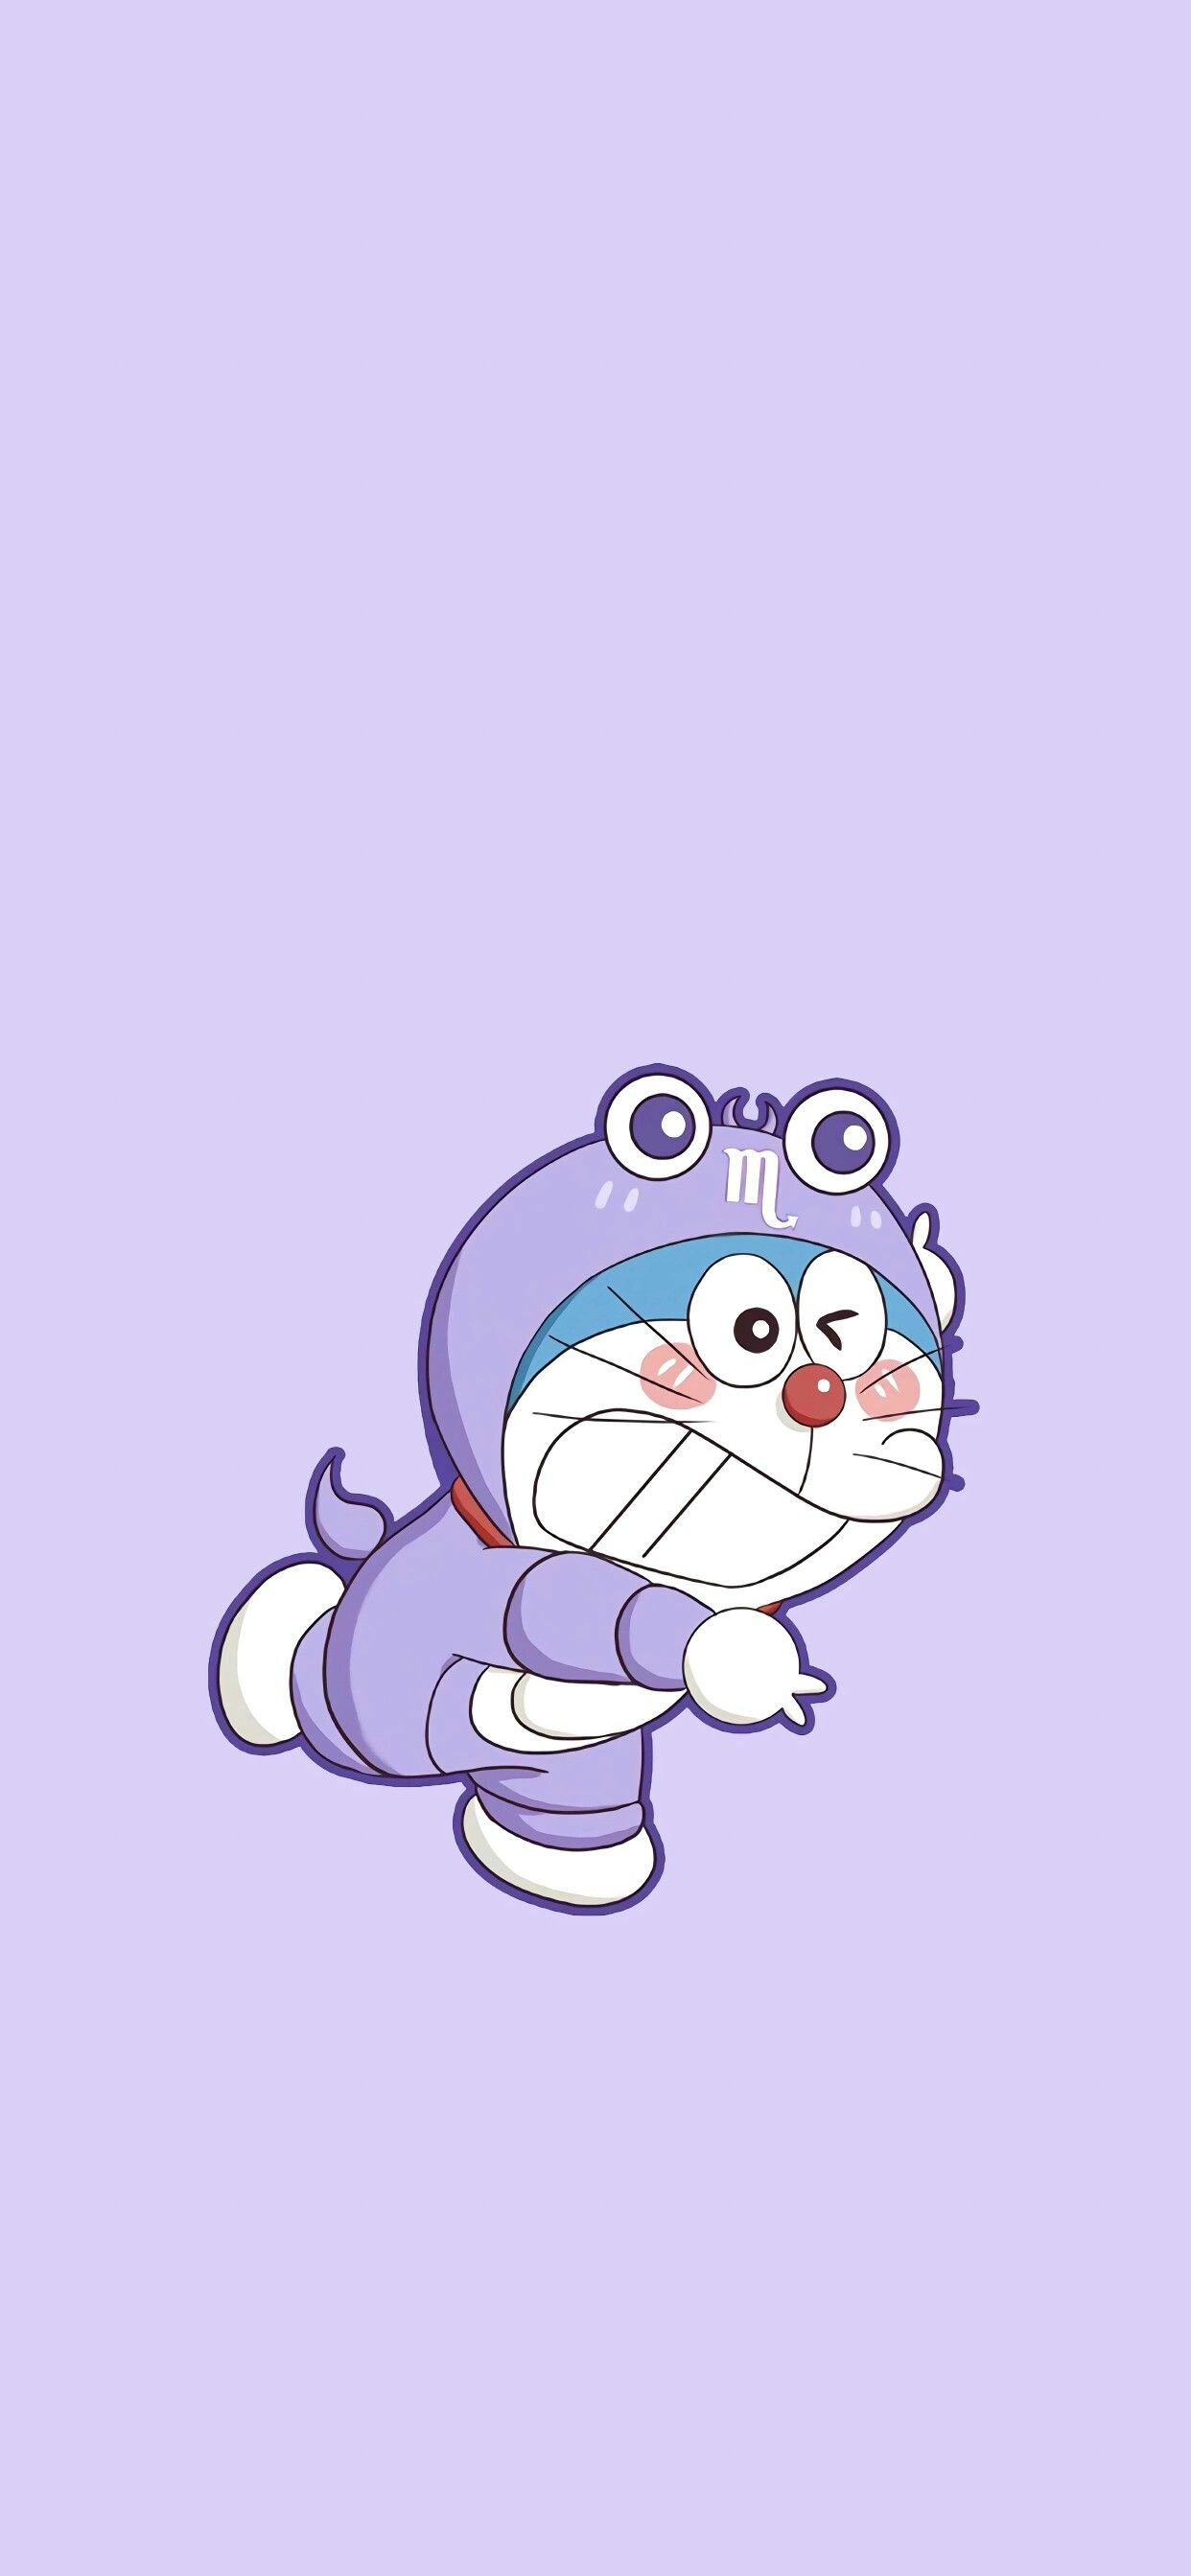 Gambar Aesthetic Doraemon